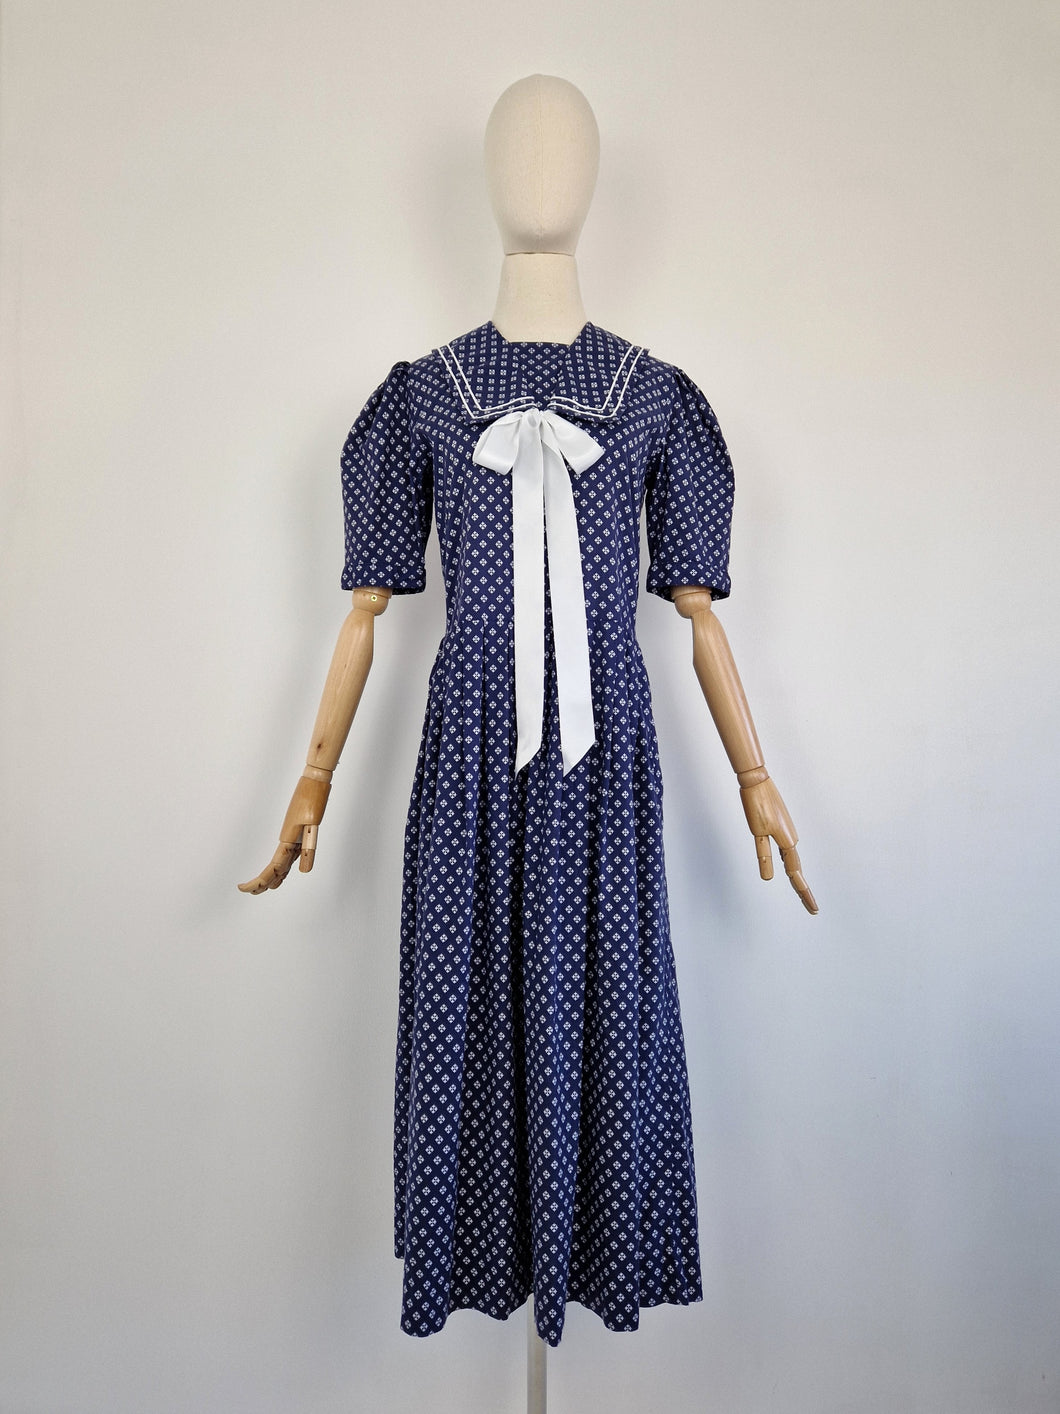 Vintage Laura Ashley sailor dress